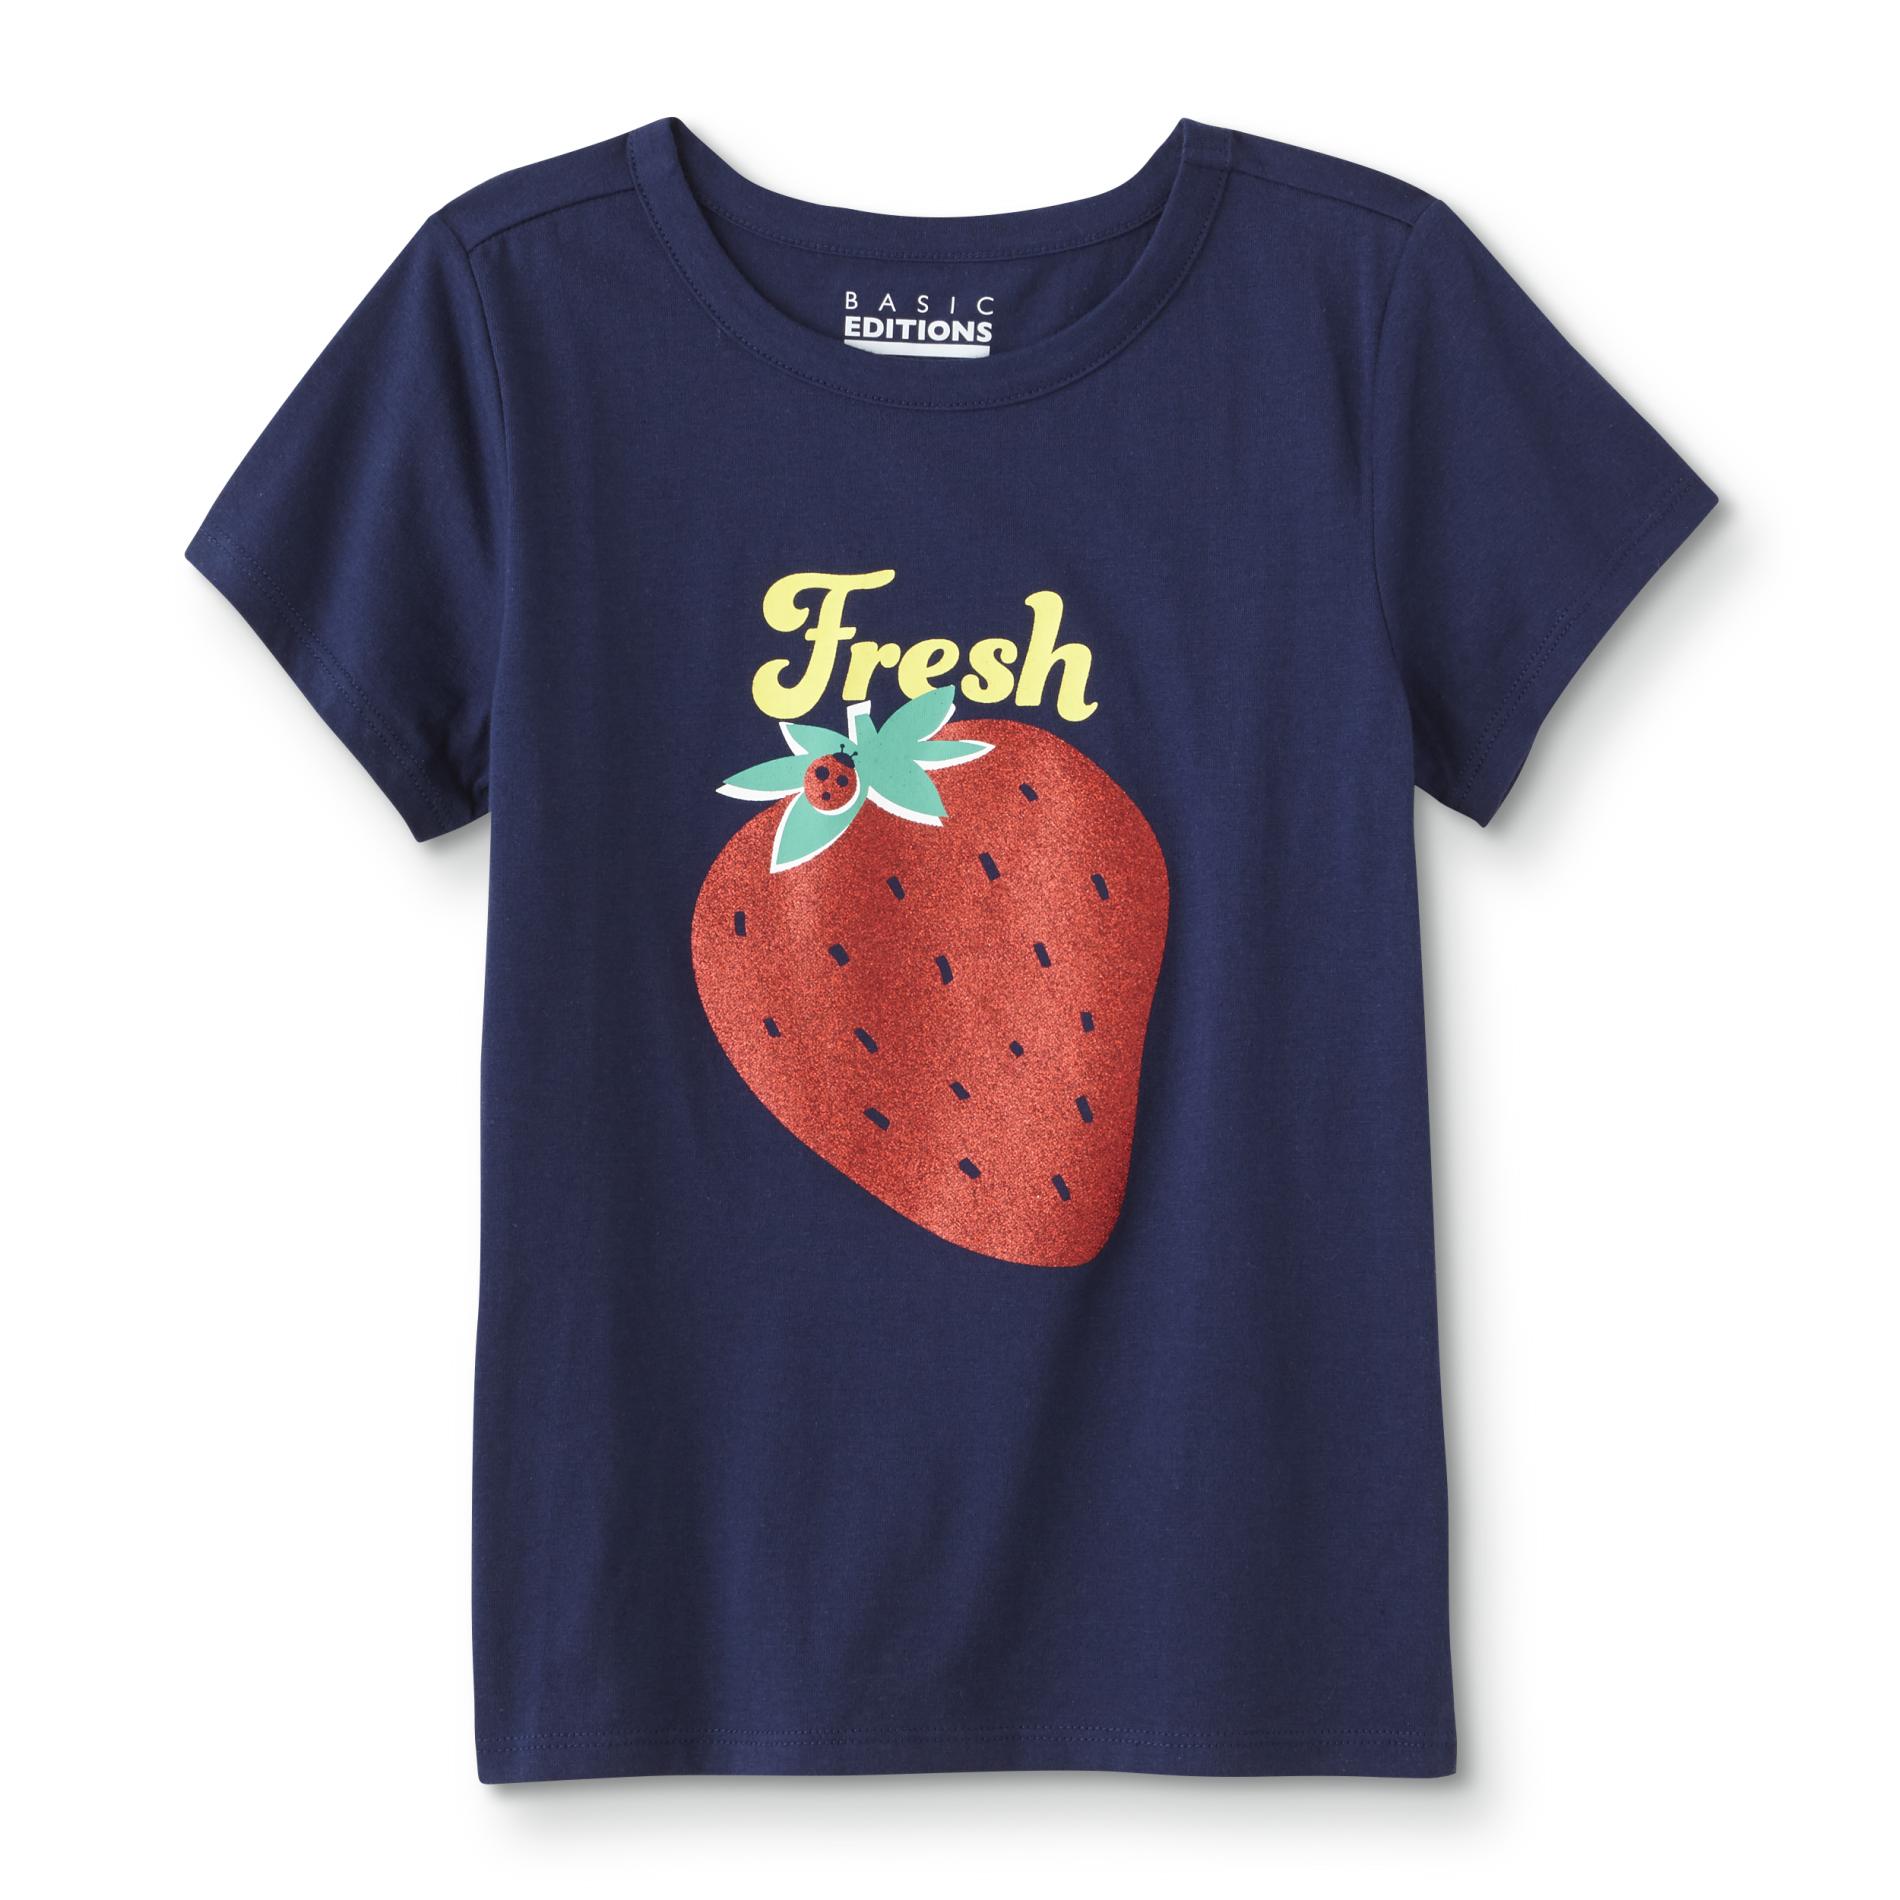 Basic Editions Girls' Graphic T-Shirt - Fresh Strawberry